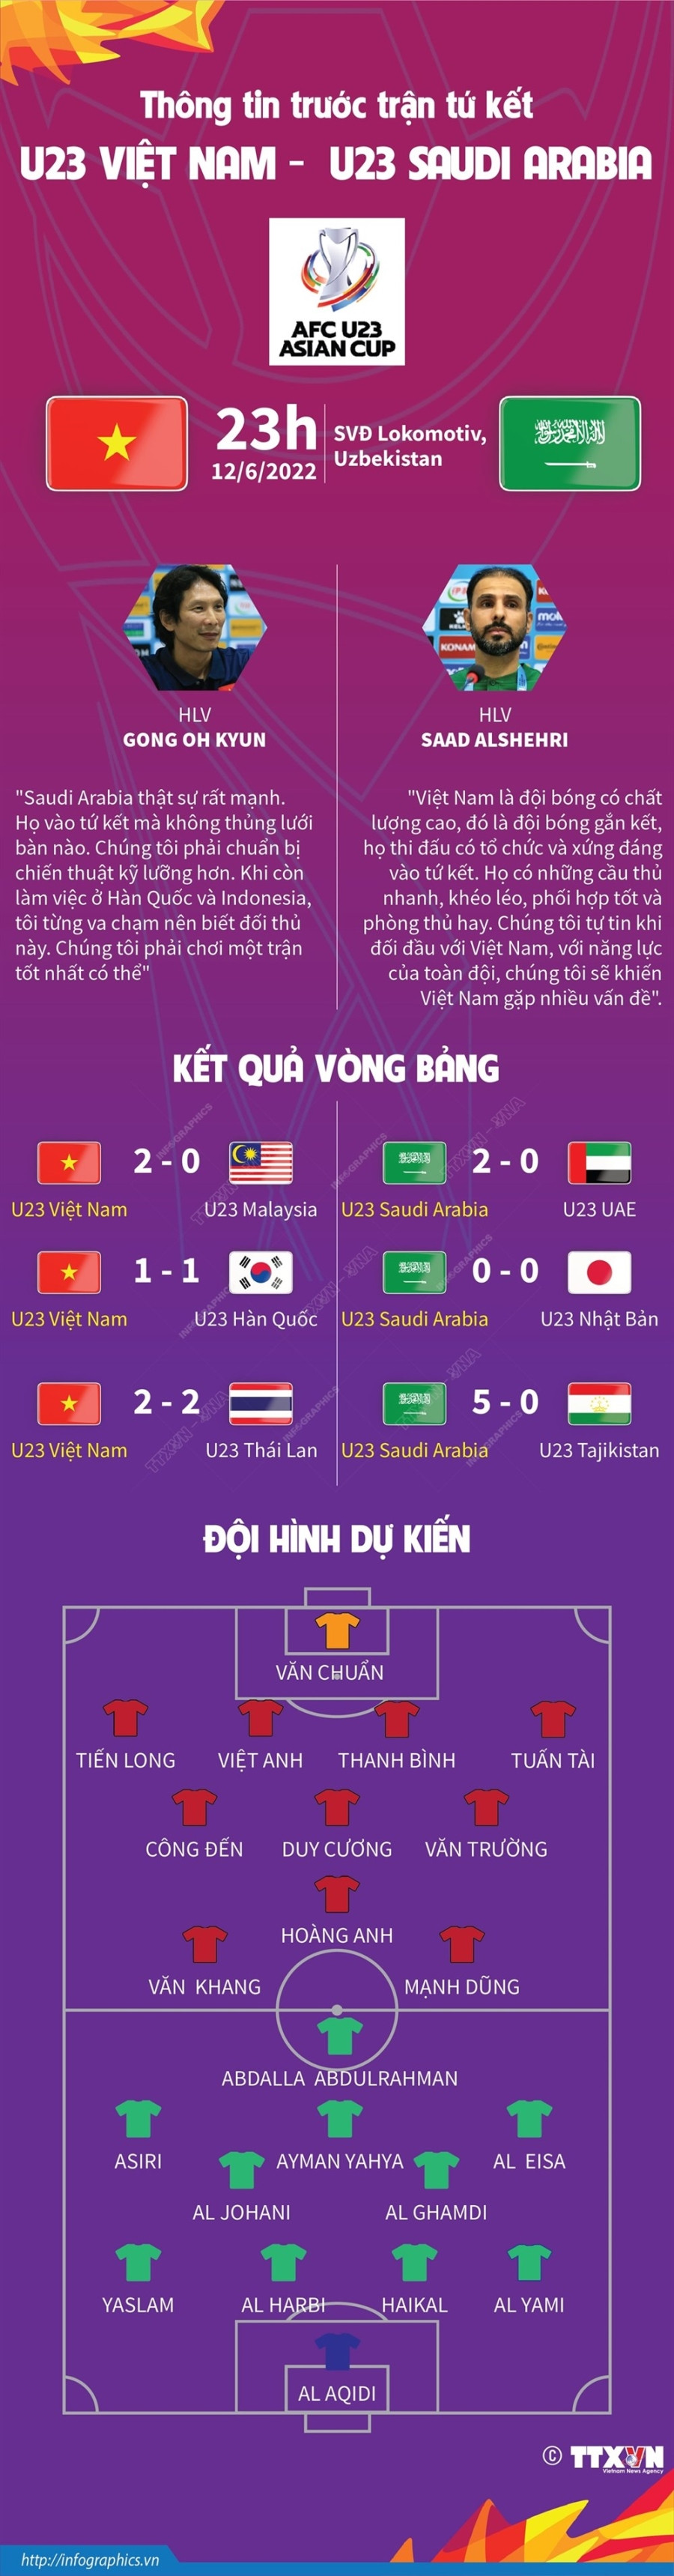 U23 Viet Nam-U23 Saudi Arabia: Cho khoanh khac bung no tu Uzbe..PV hinh anh 3